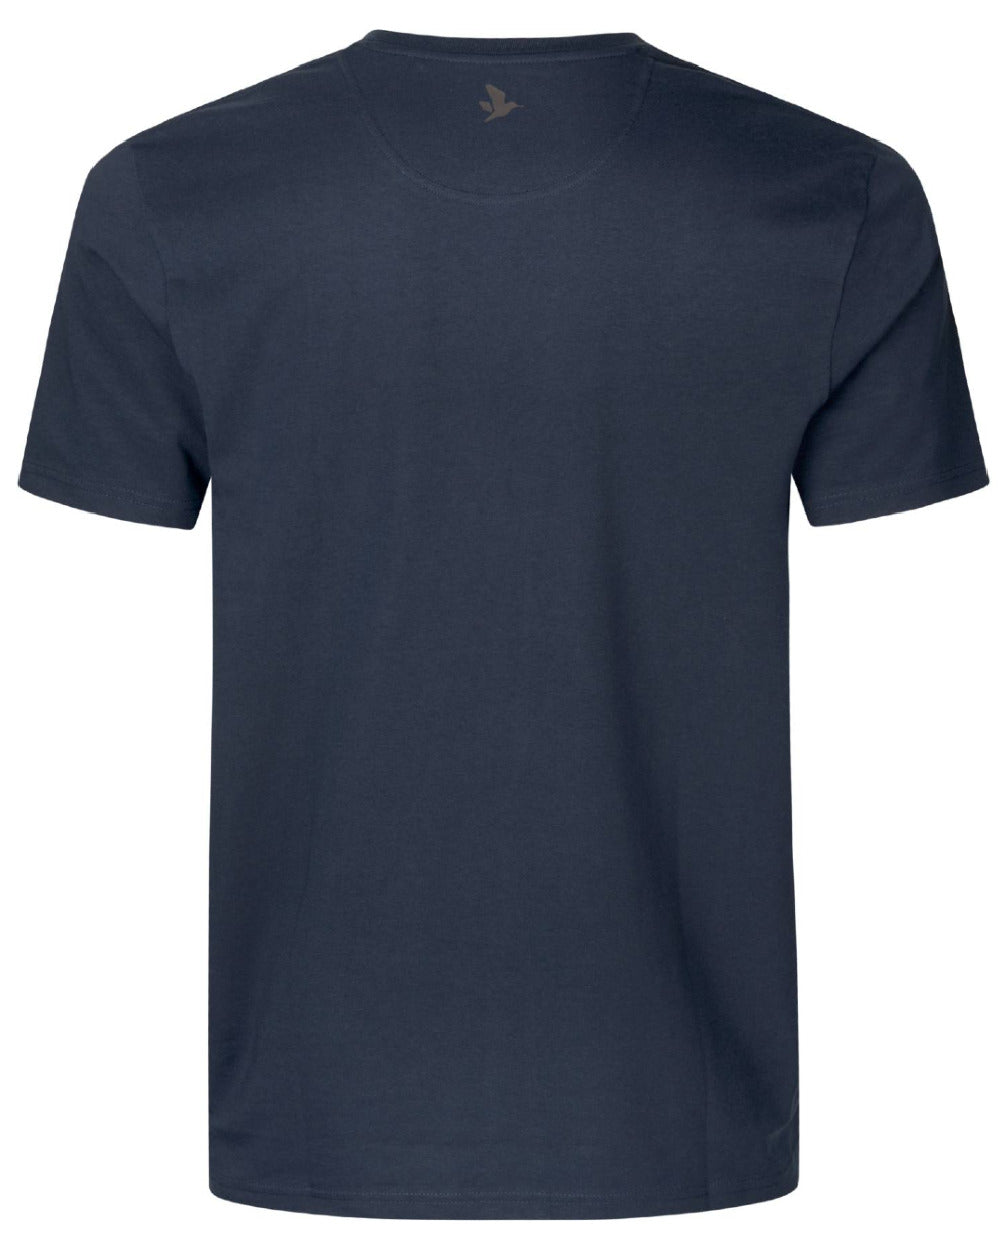 Dark Navy Coloured Seeland Path T-Shirt On A White Background